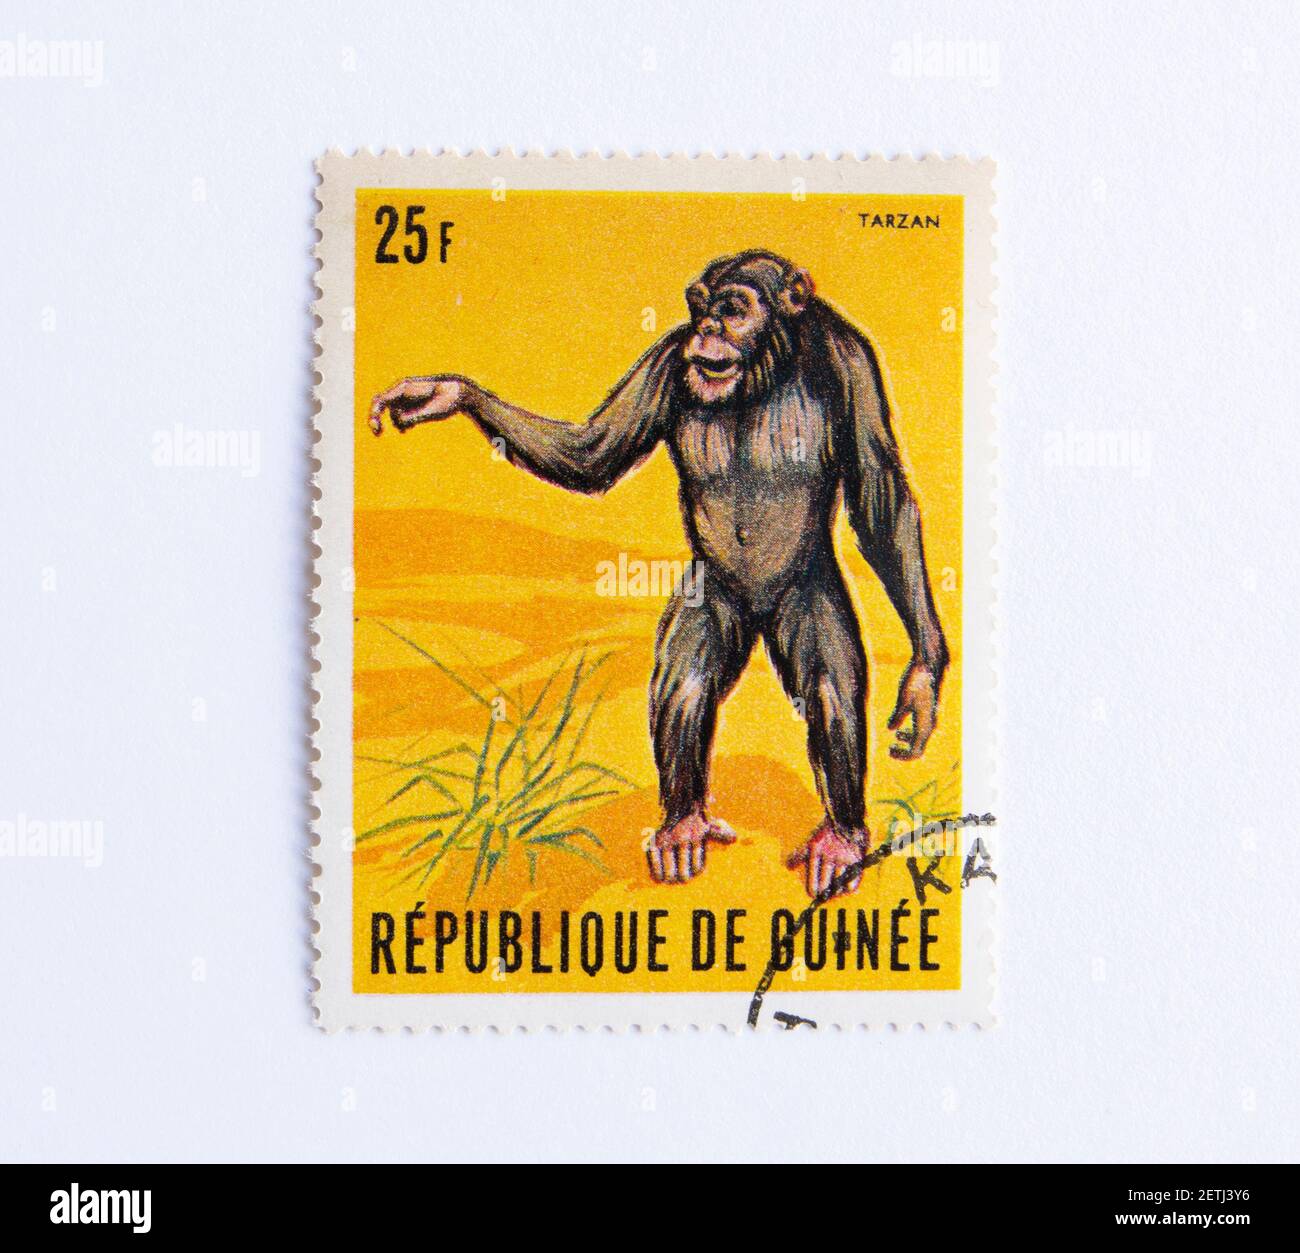 01.03.2021 Istanbul Turchia. Repubblica di Guinea francobollo circa1969. Repubblica di Guinea. Scimpanzé Tarzan Foto Stock